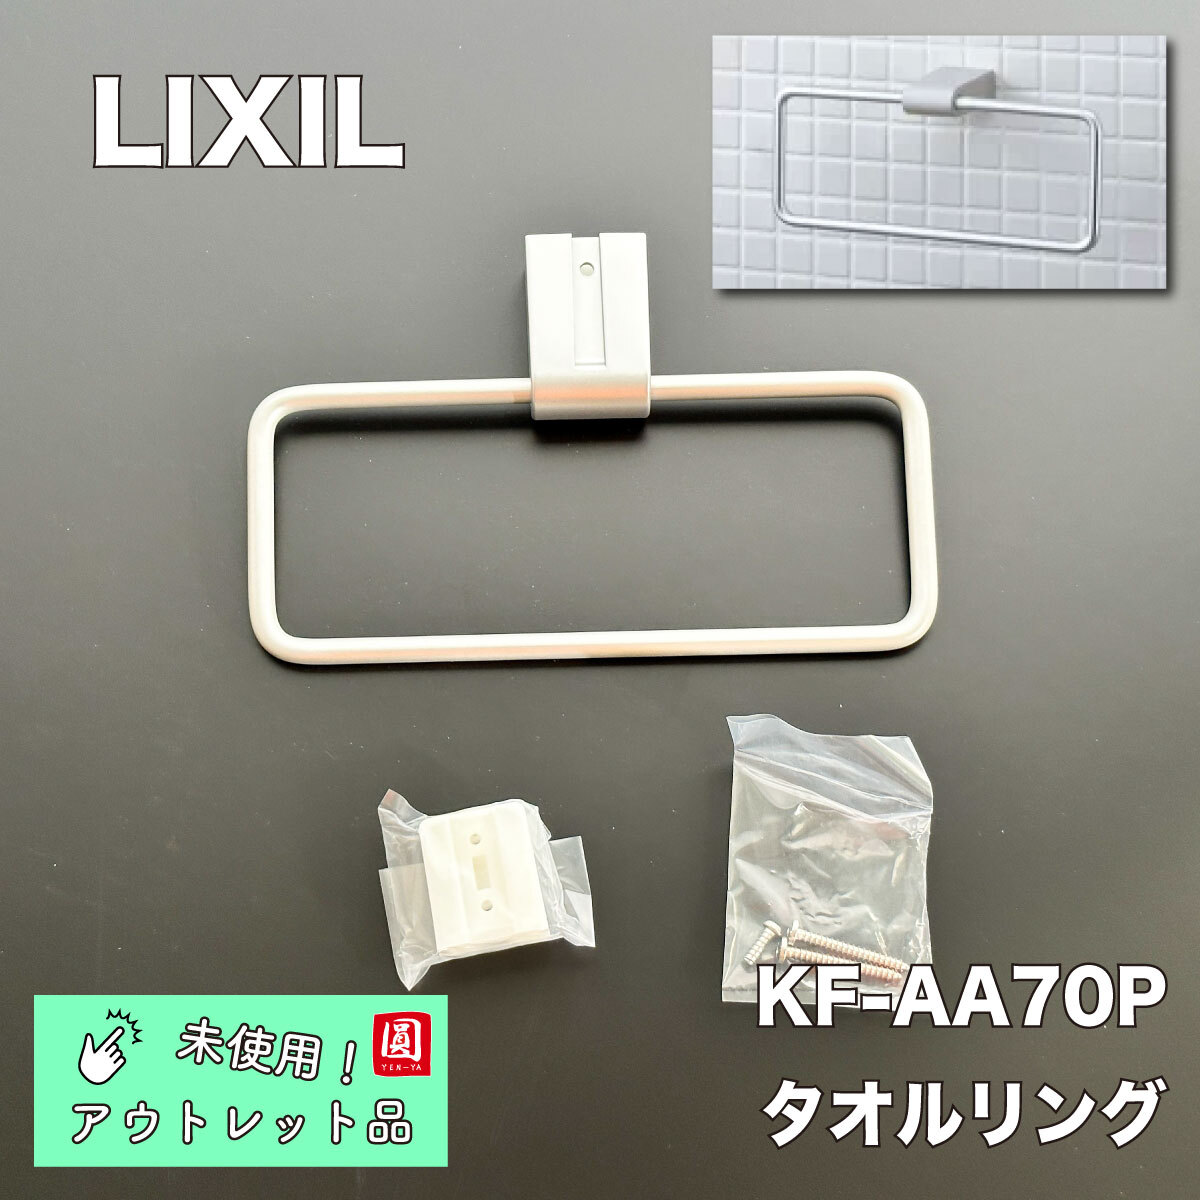 <LIXIL> полотенце кольцо ( номер образца :KF-AA70P)[ не использовался outlet ]